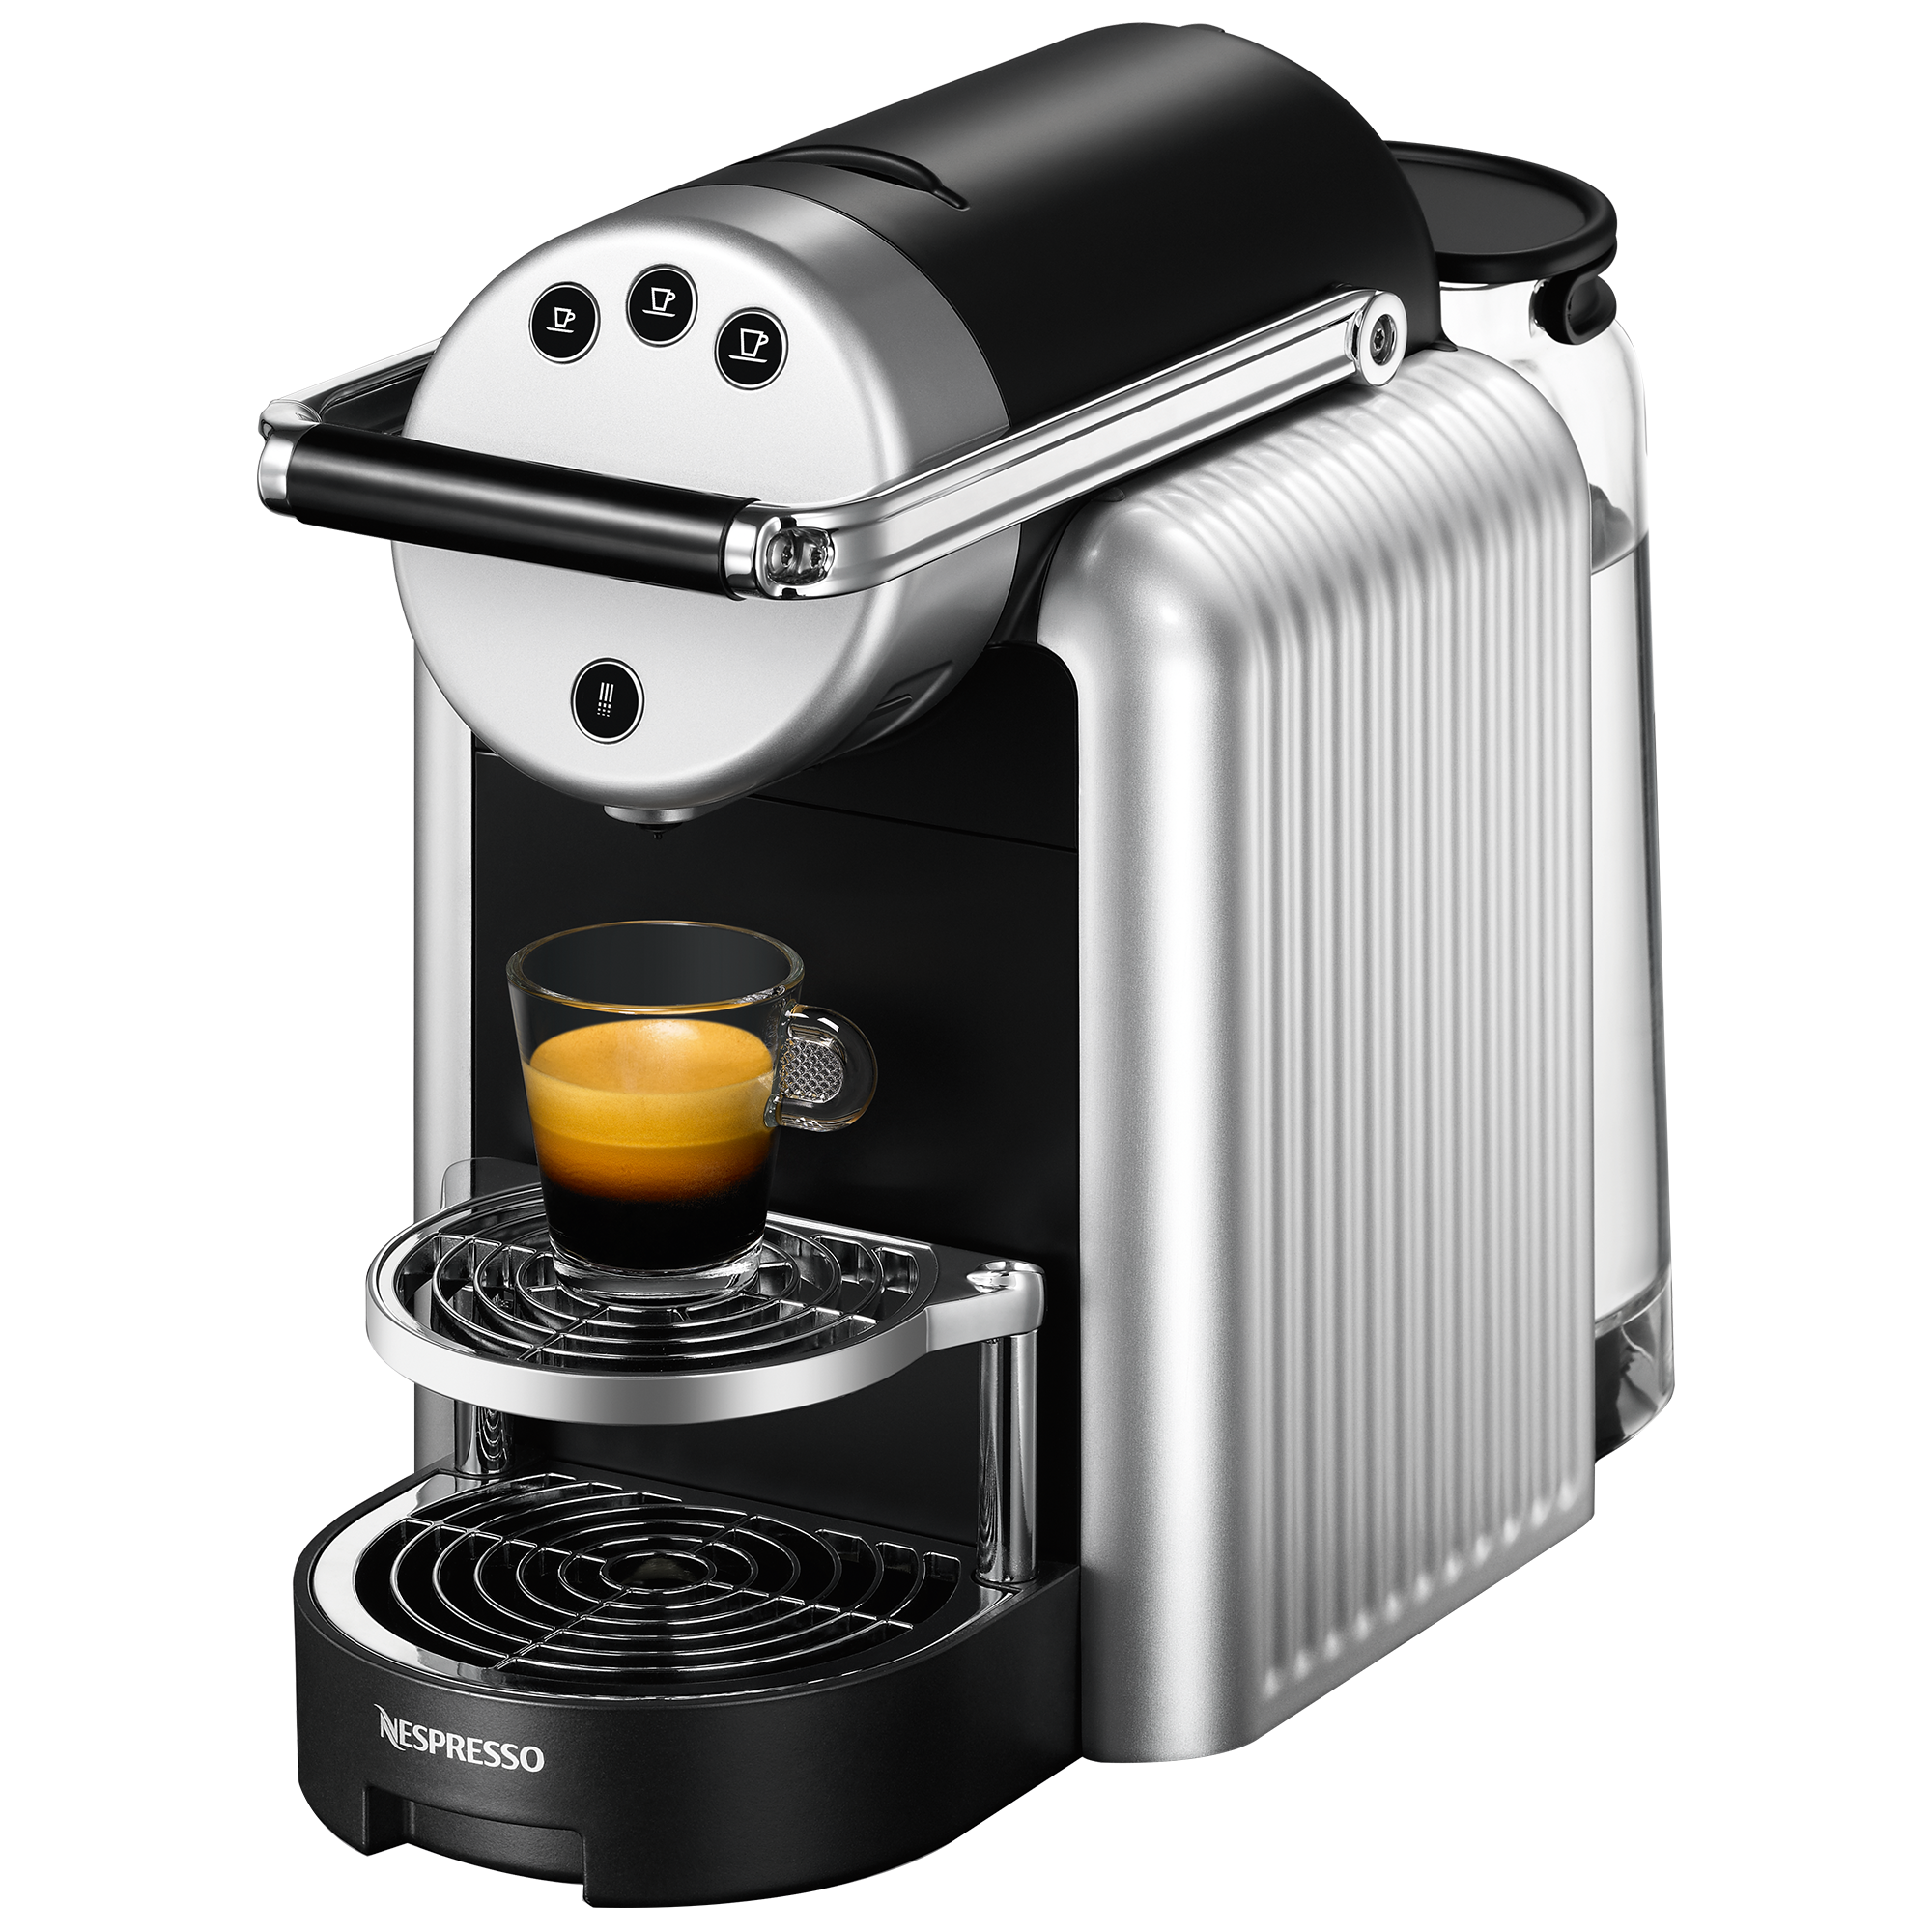 Nespresso Professional Coffee Machines & Coffee